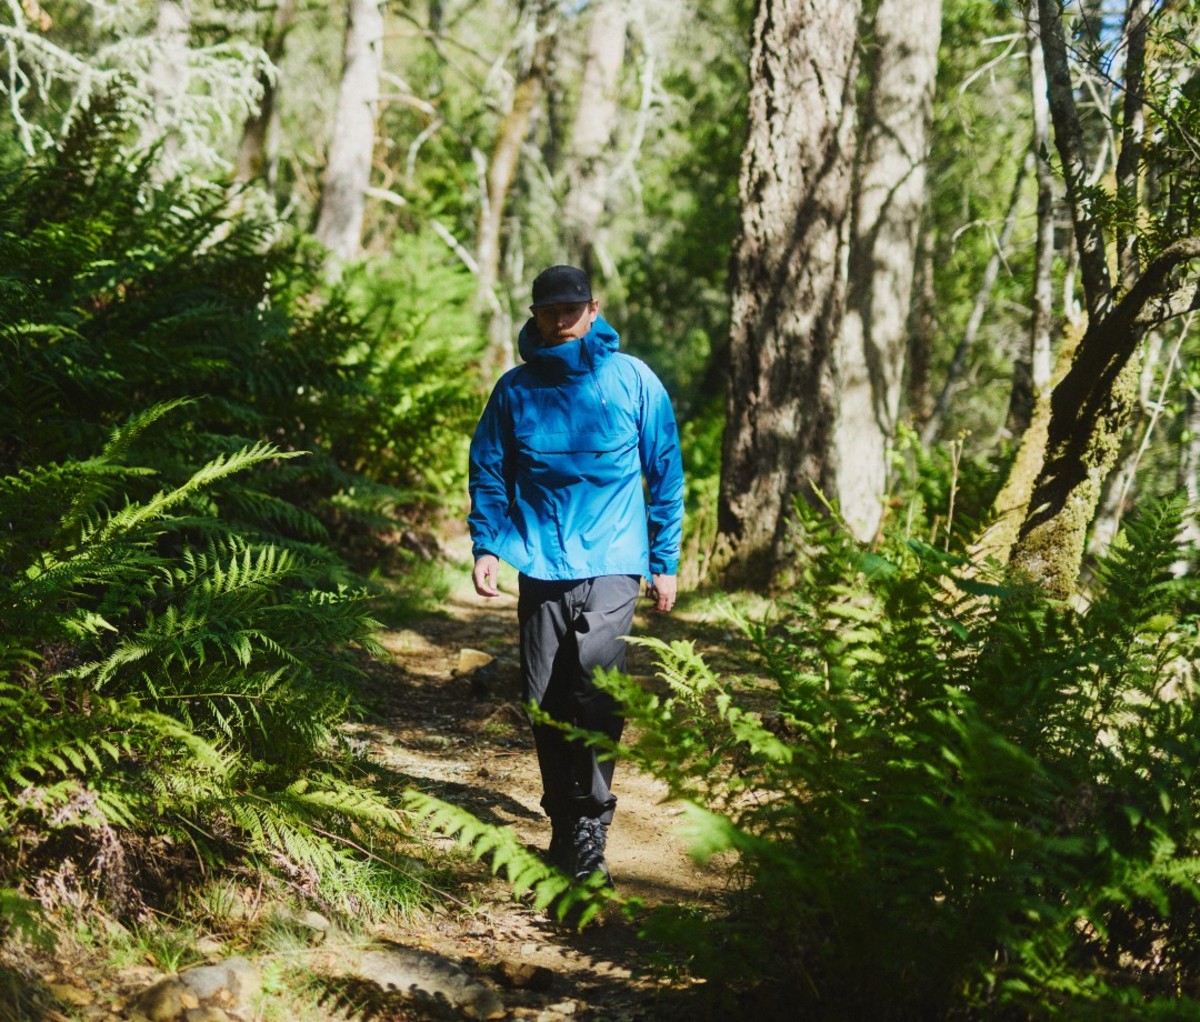 Man in blue jacket walking through forest